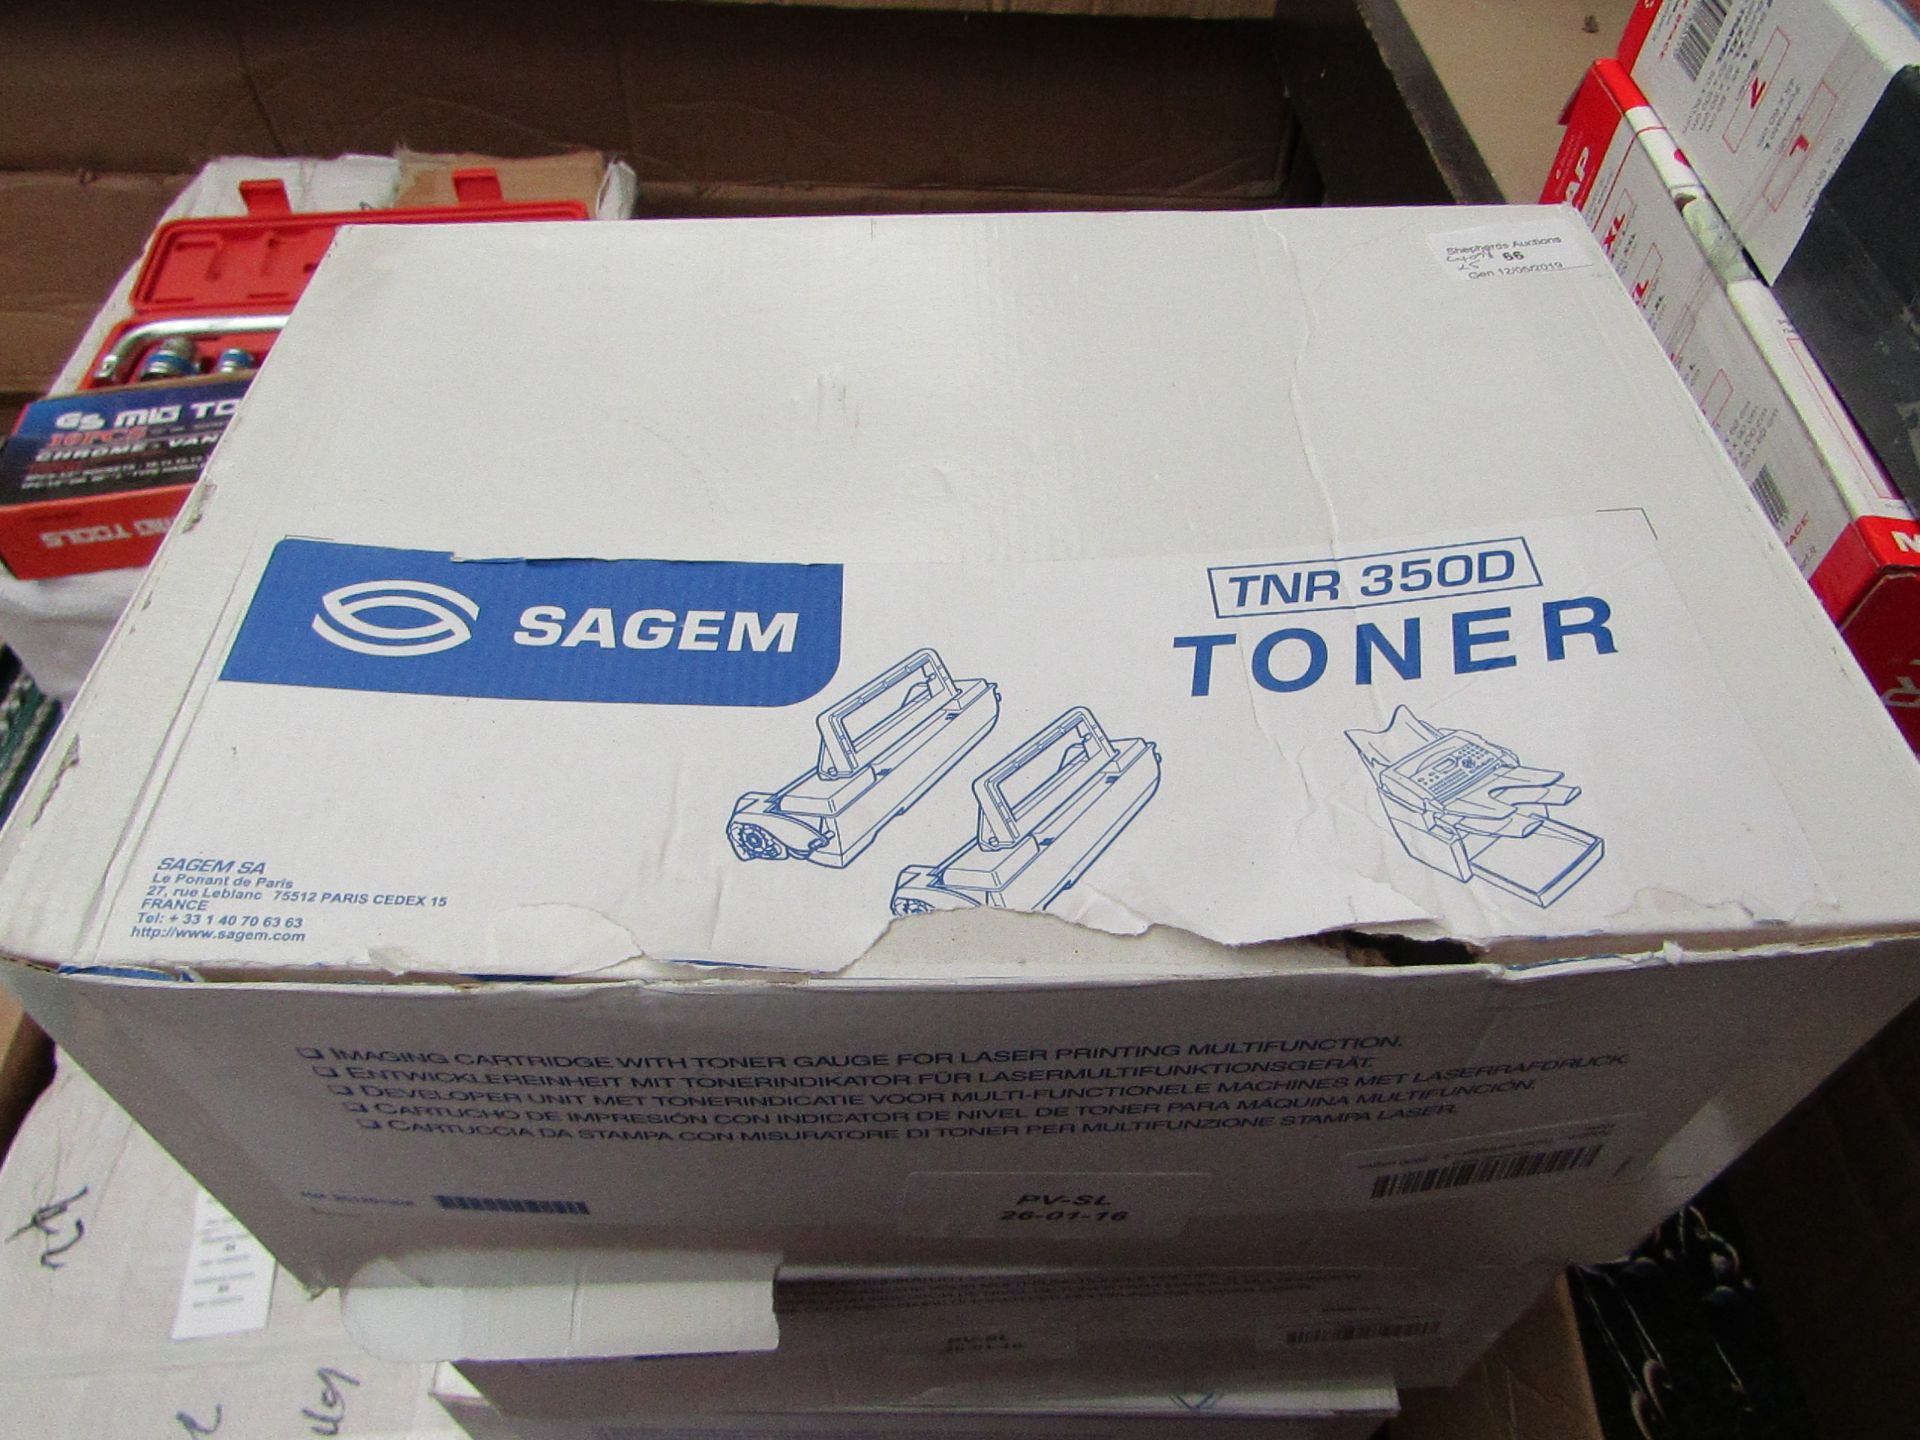 4 x Boxes of Sagem TNR 350D Toners pv-sl 26-01-16, new in box